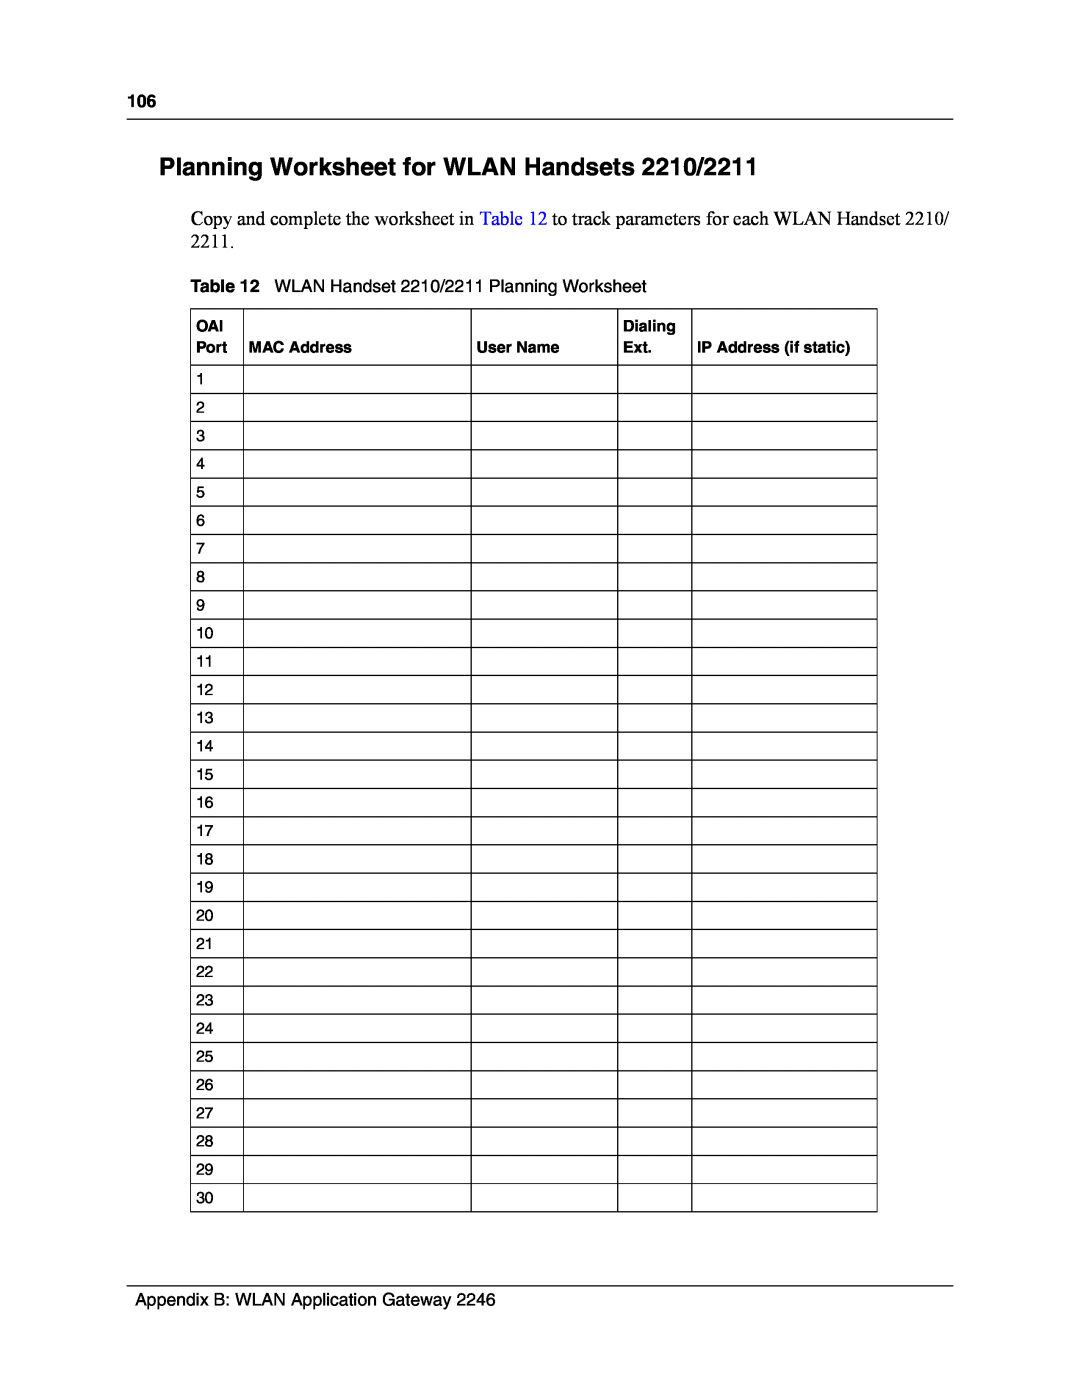 Nortel Networks MOG7xx Planning Worksheet for WLAN Handsets 2210/2211, WLAN Handset 2210/2211 Planning Worksheet, Dialing 